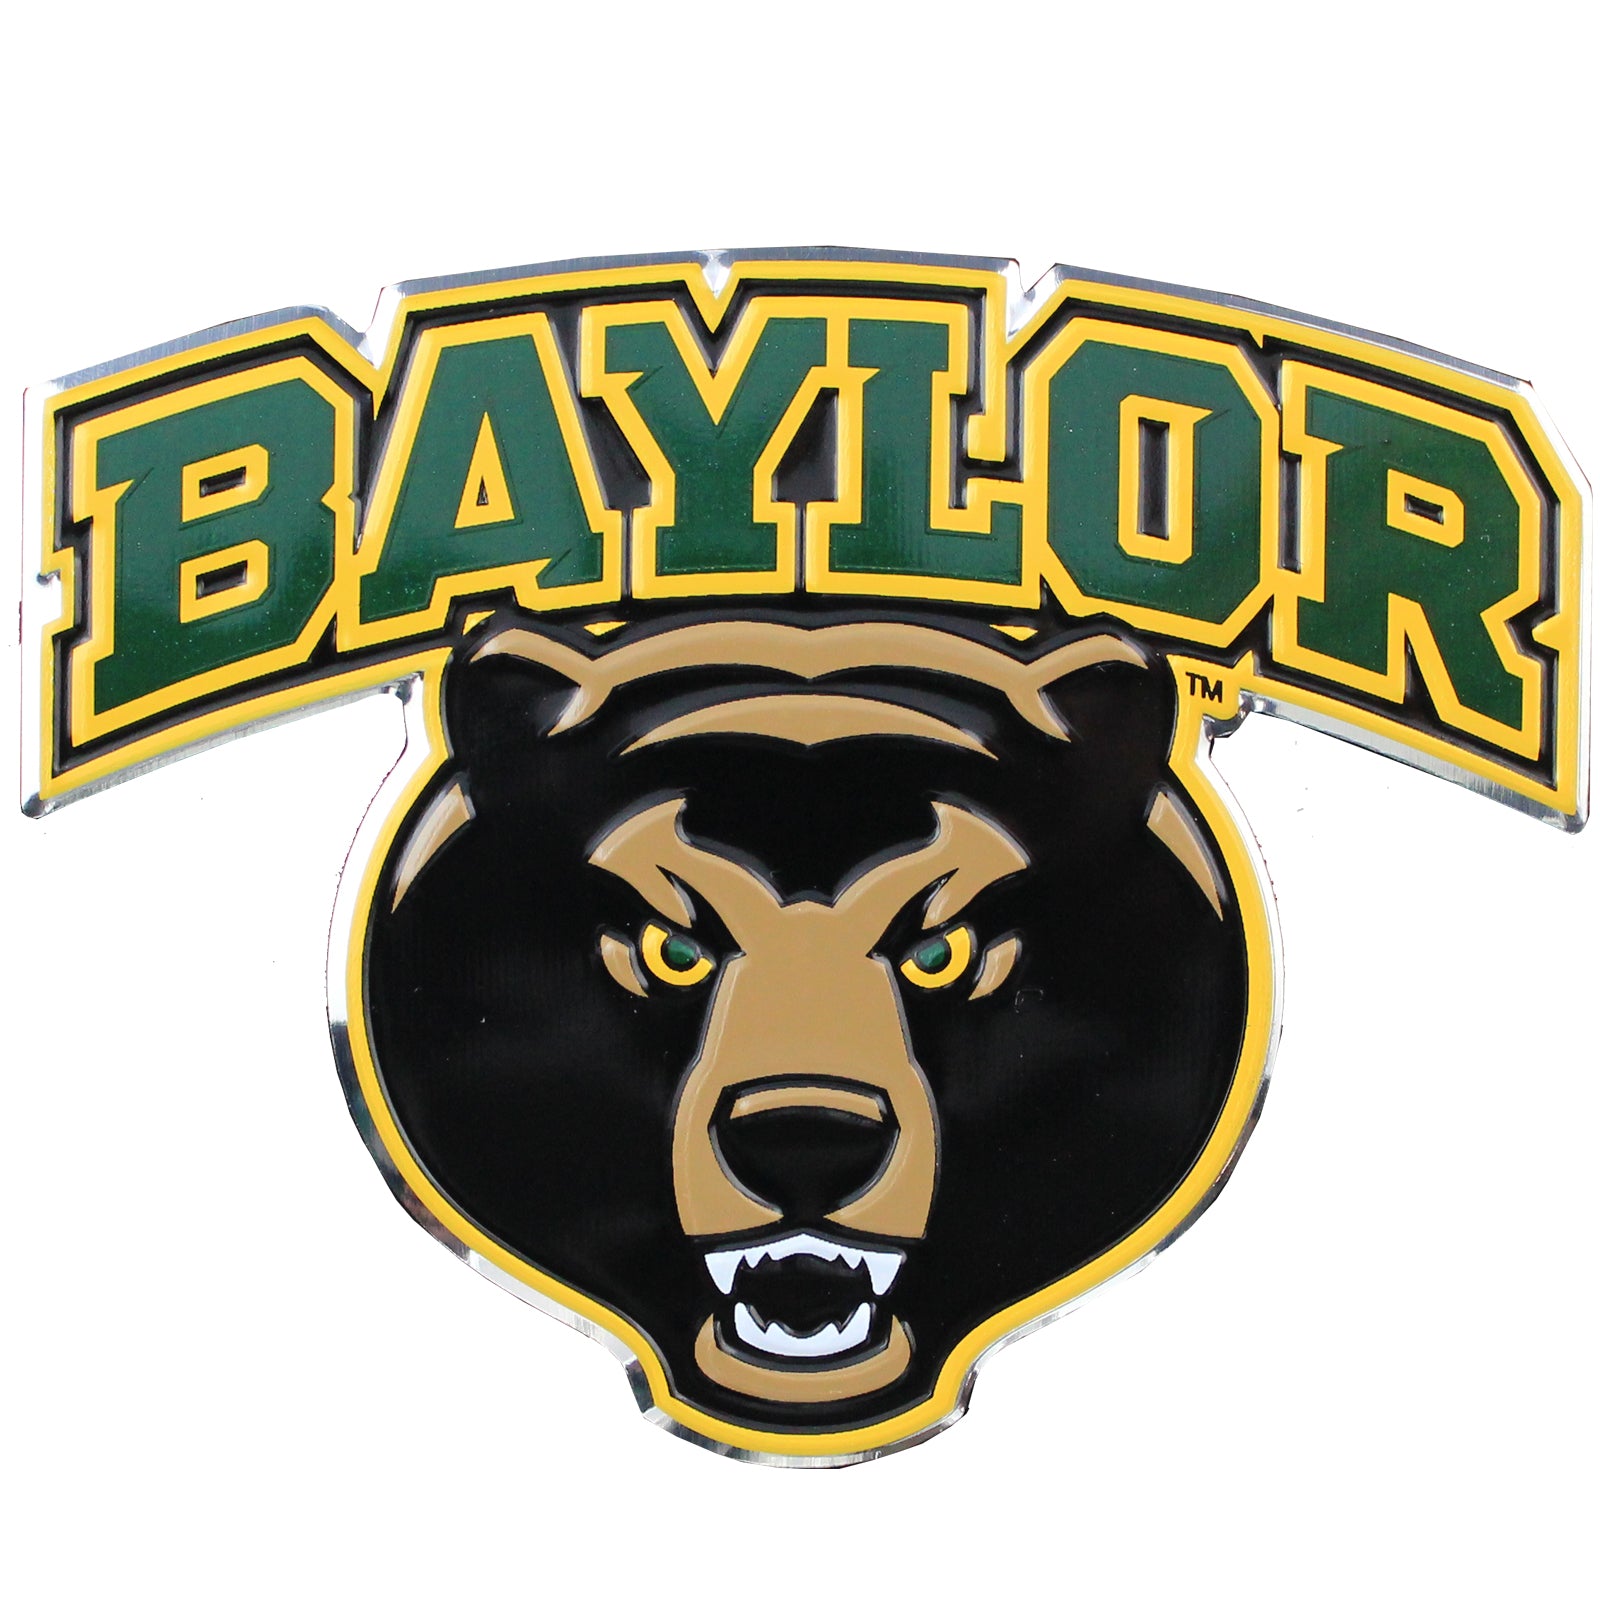 Baylor Bears University Colored Aluminum Car Auto Emblem 